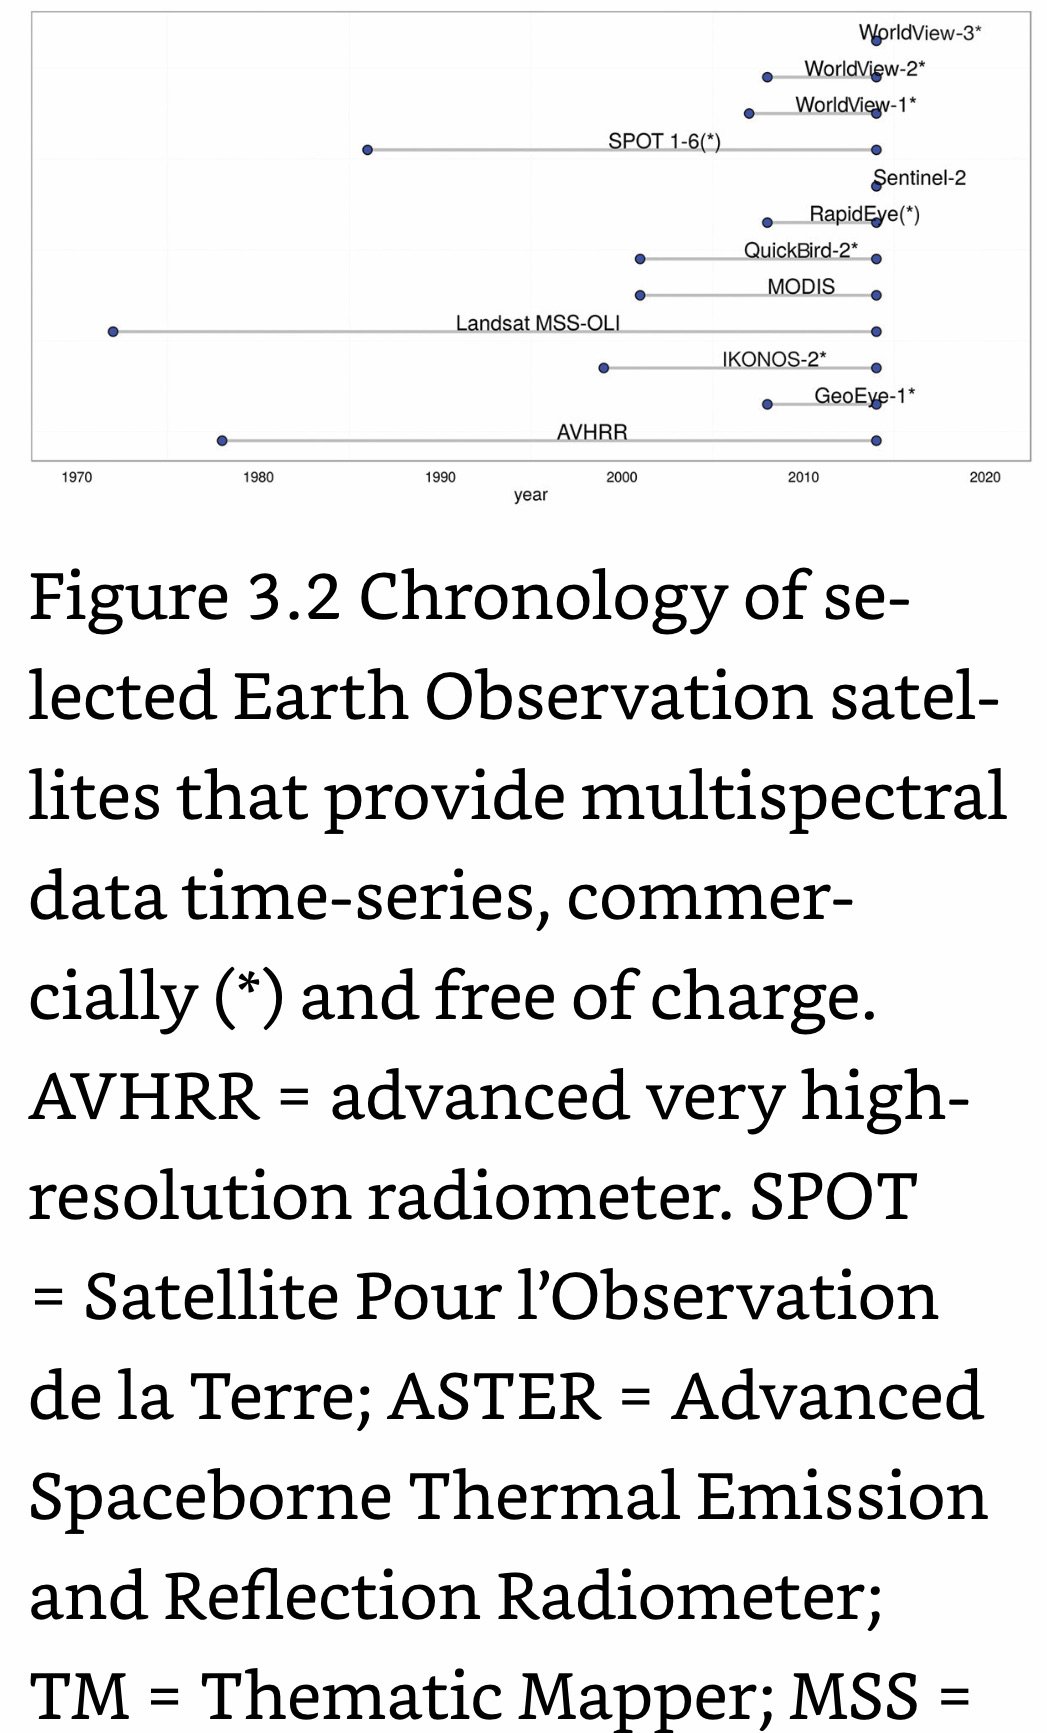 Chronology of Various Satelite Sensor Systems.jpeg